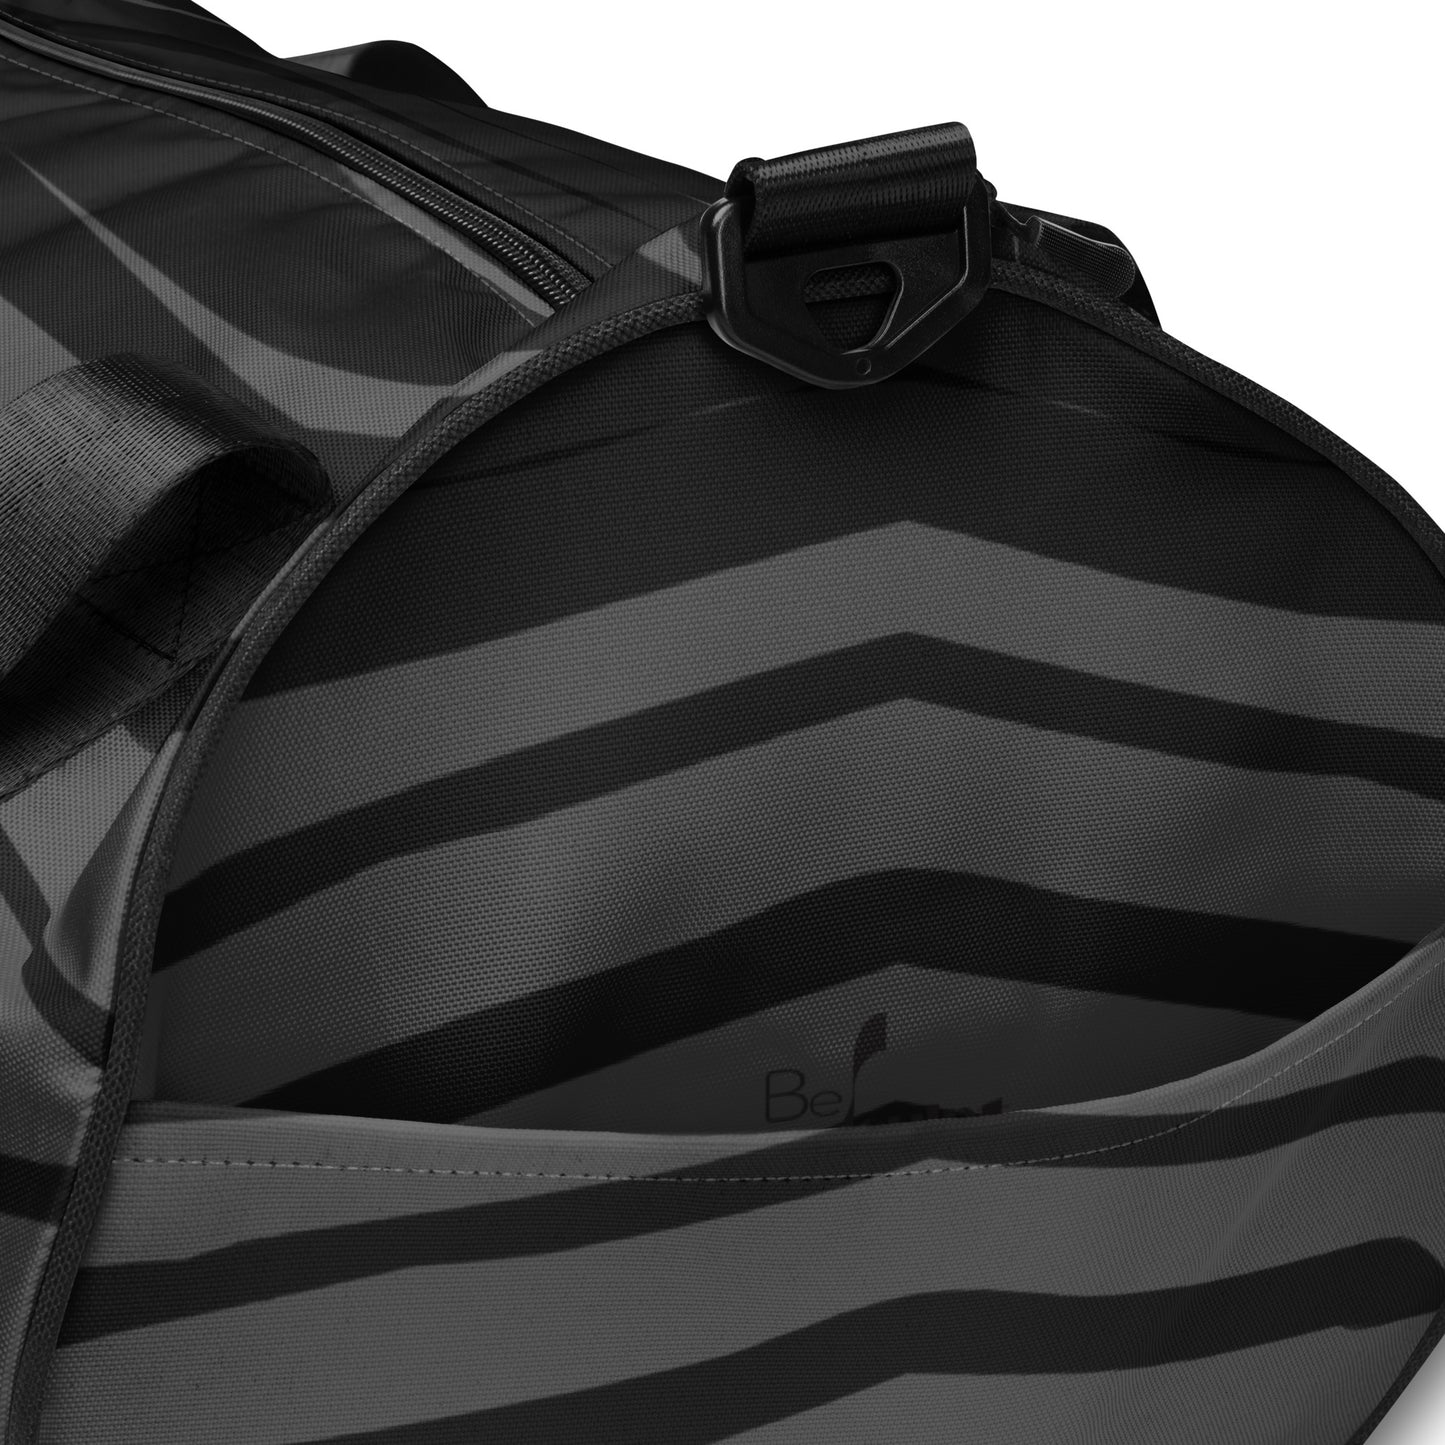 Black H Stripes BeSculpt Gym Bag 2